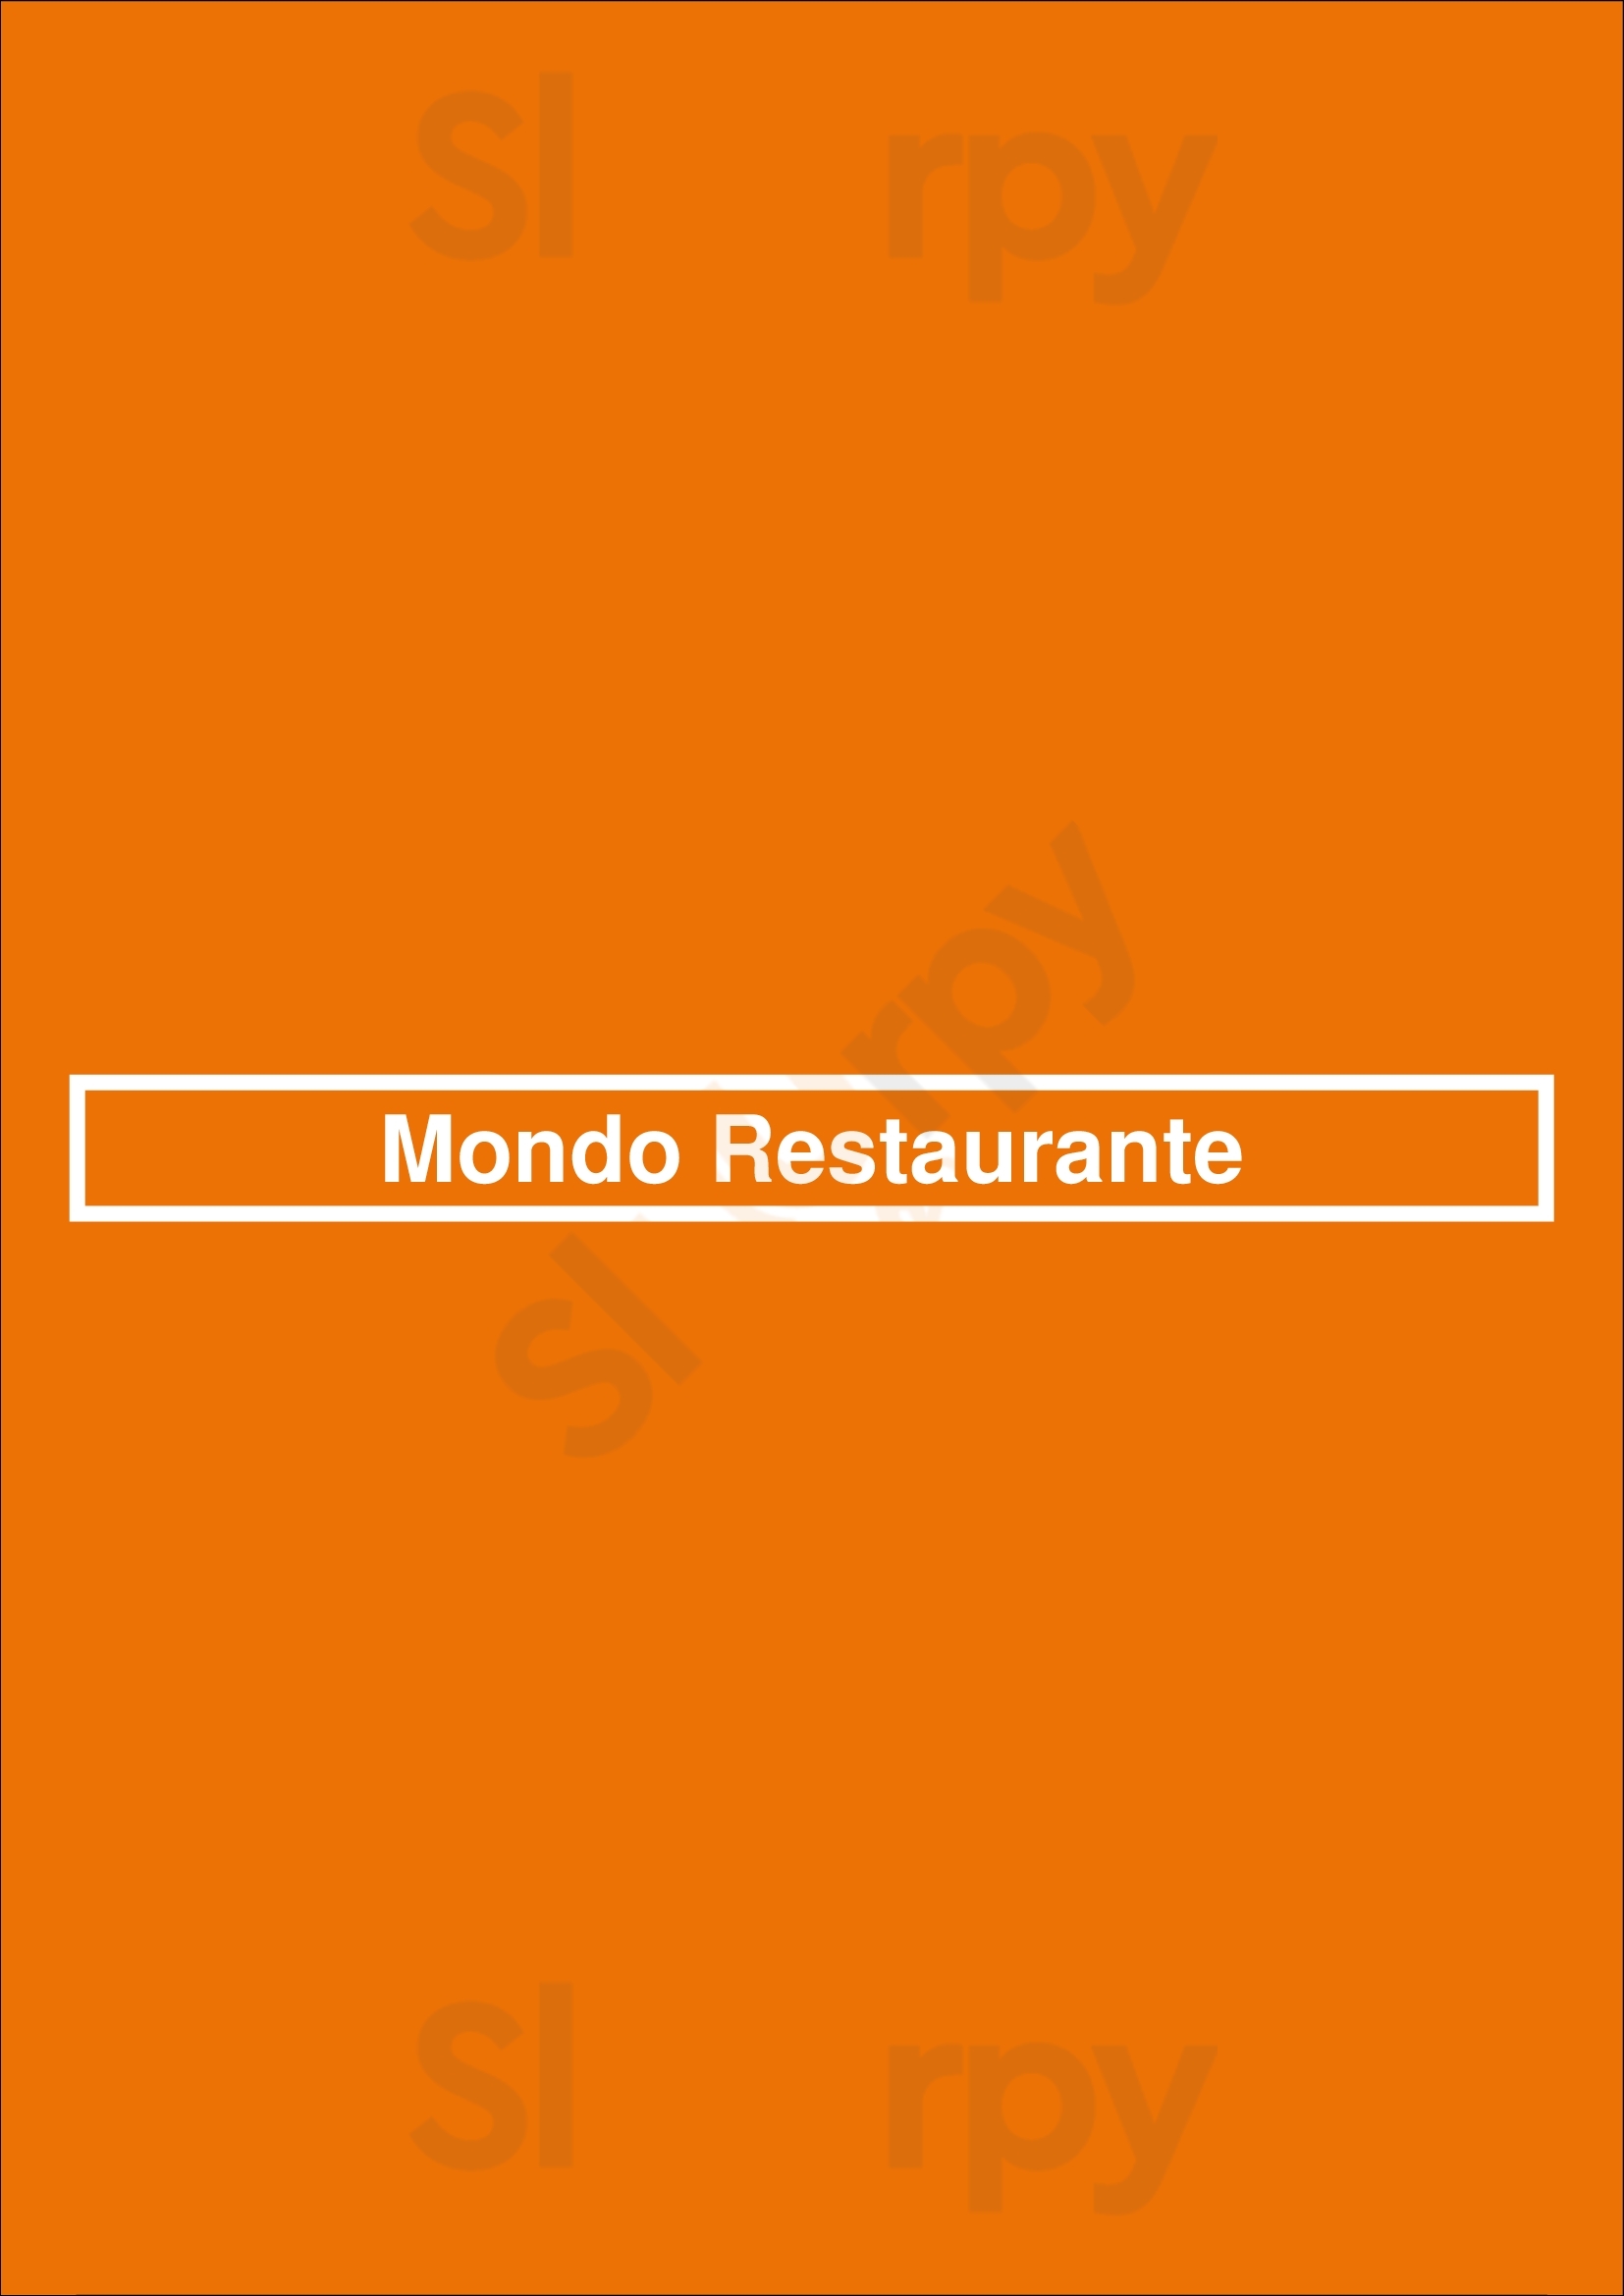 Mondo Restaurante Barcelona Menu - 1